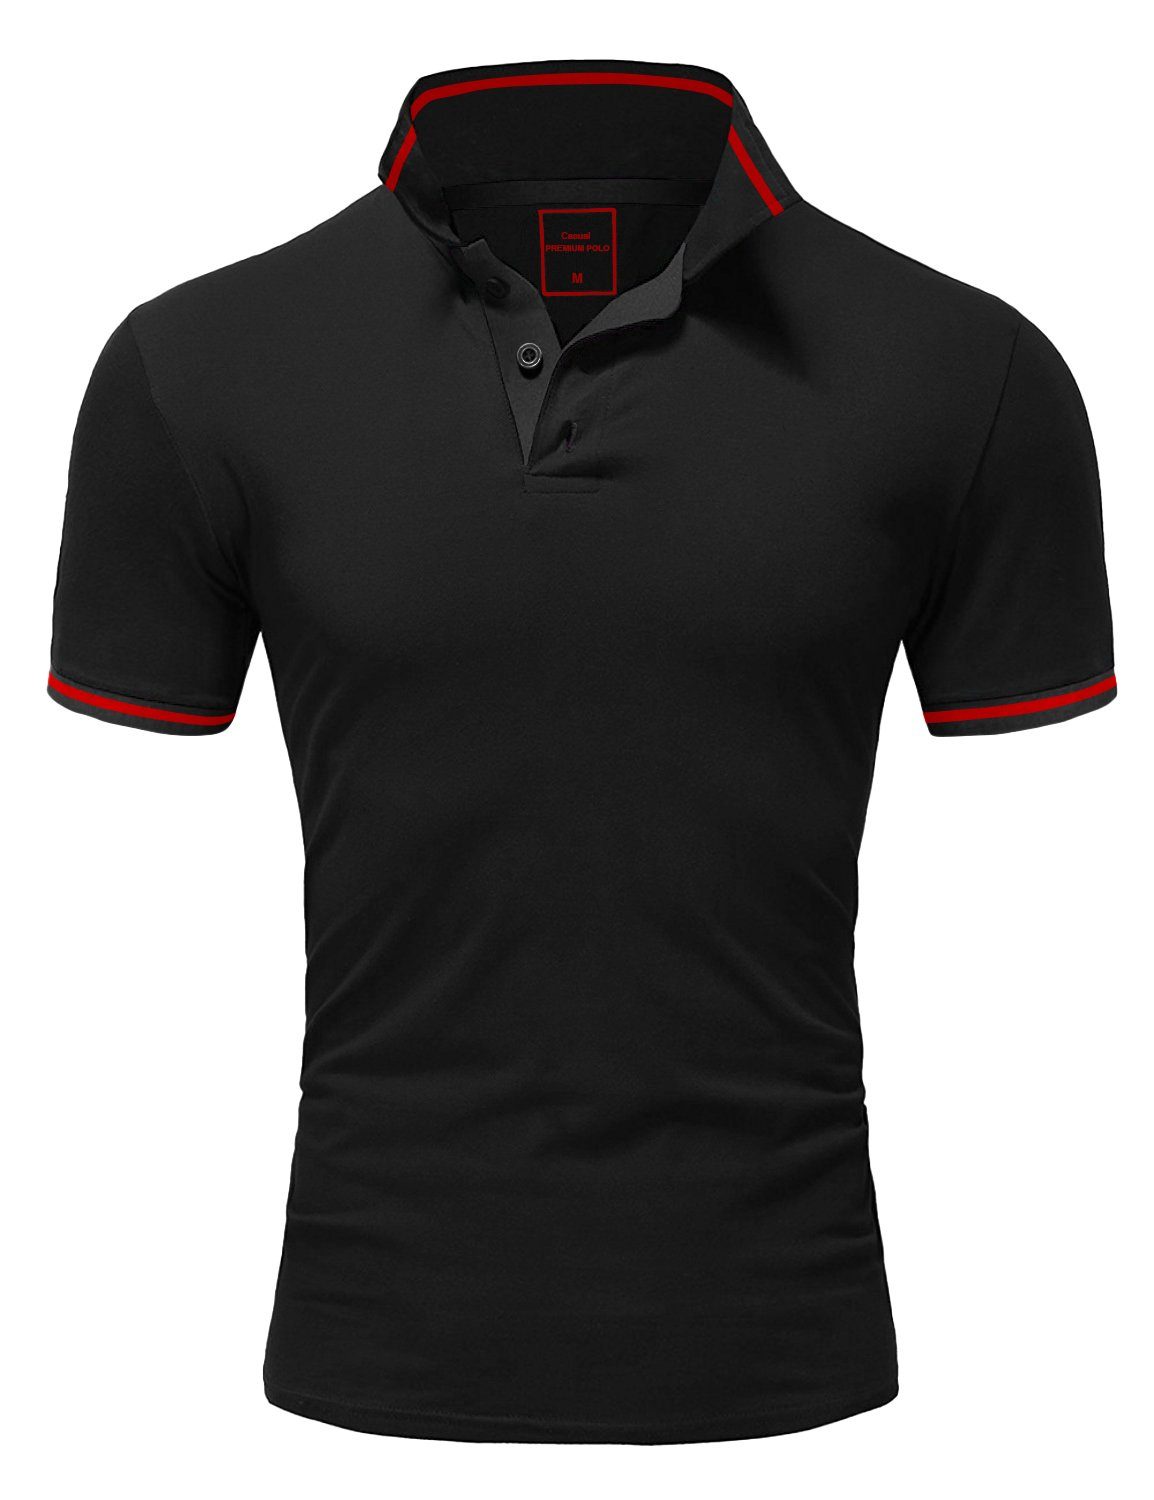 Amaci&Sons Poloshirt PROVIDENCE Herren Basic Kontrast Kurzarm Polohemd T-Shirt Schwarz/Rot